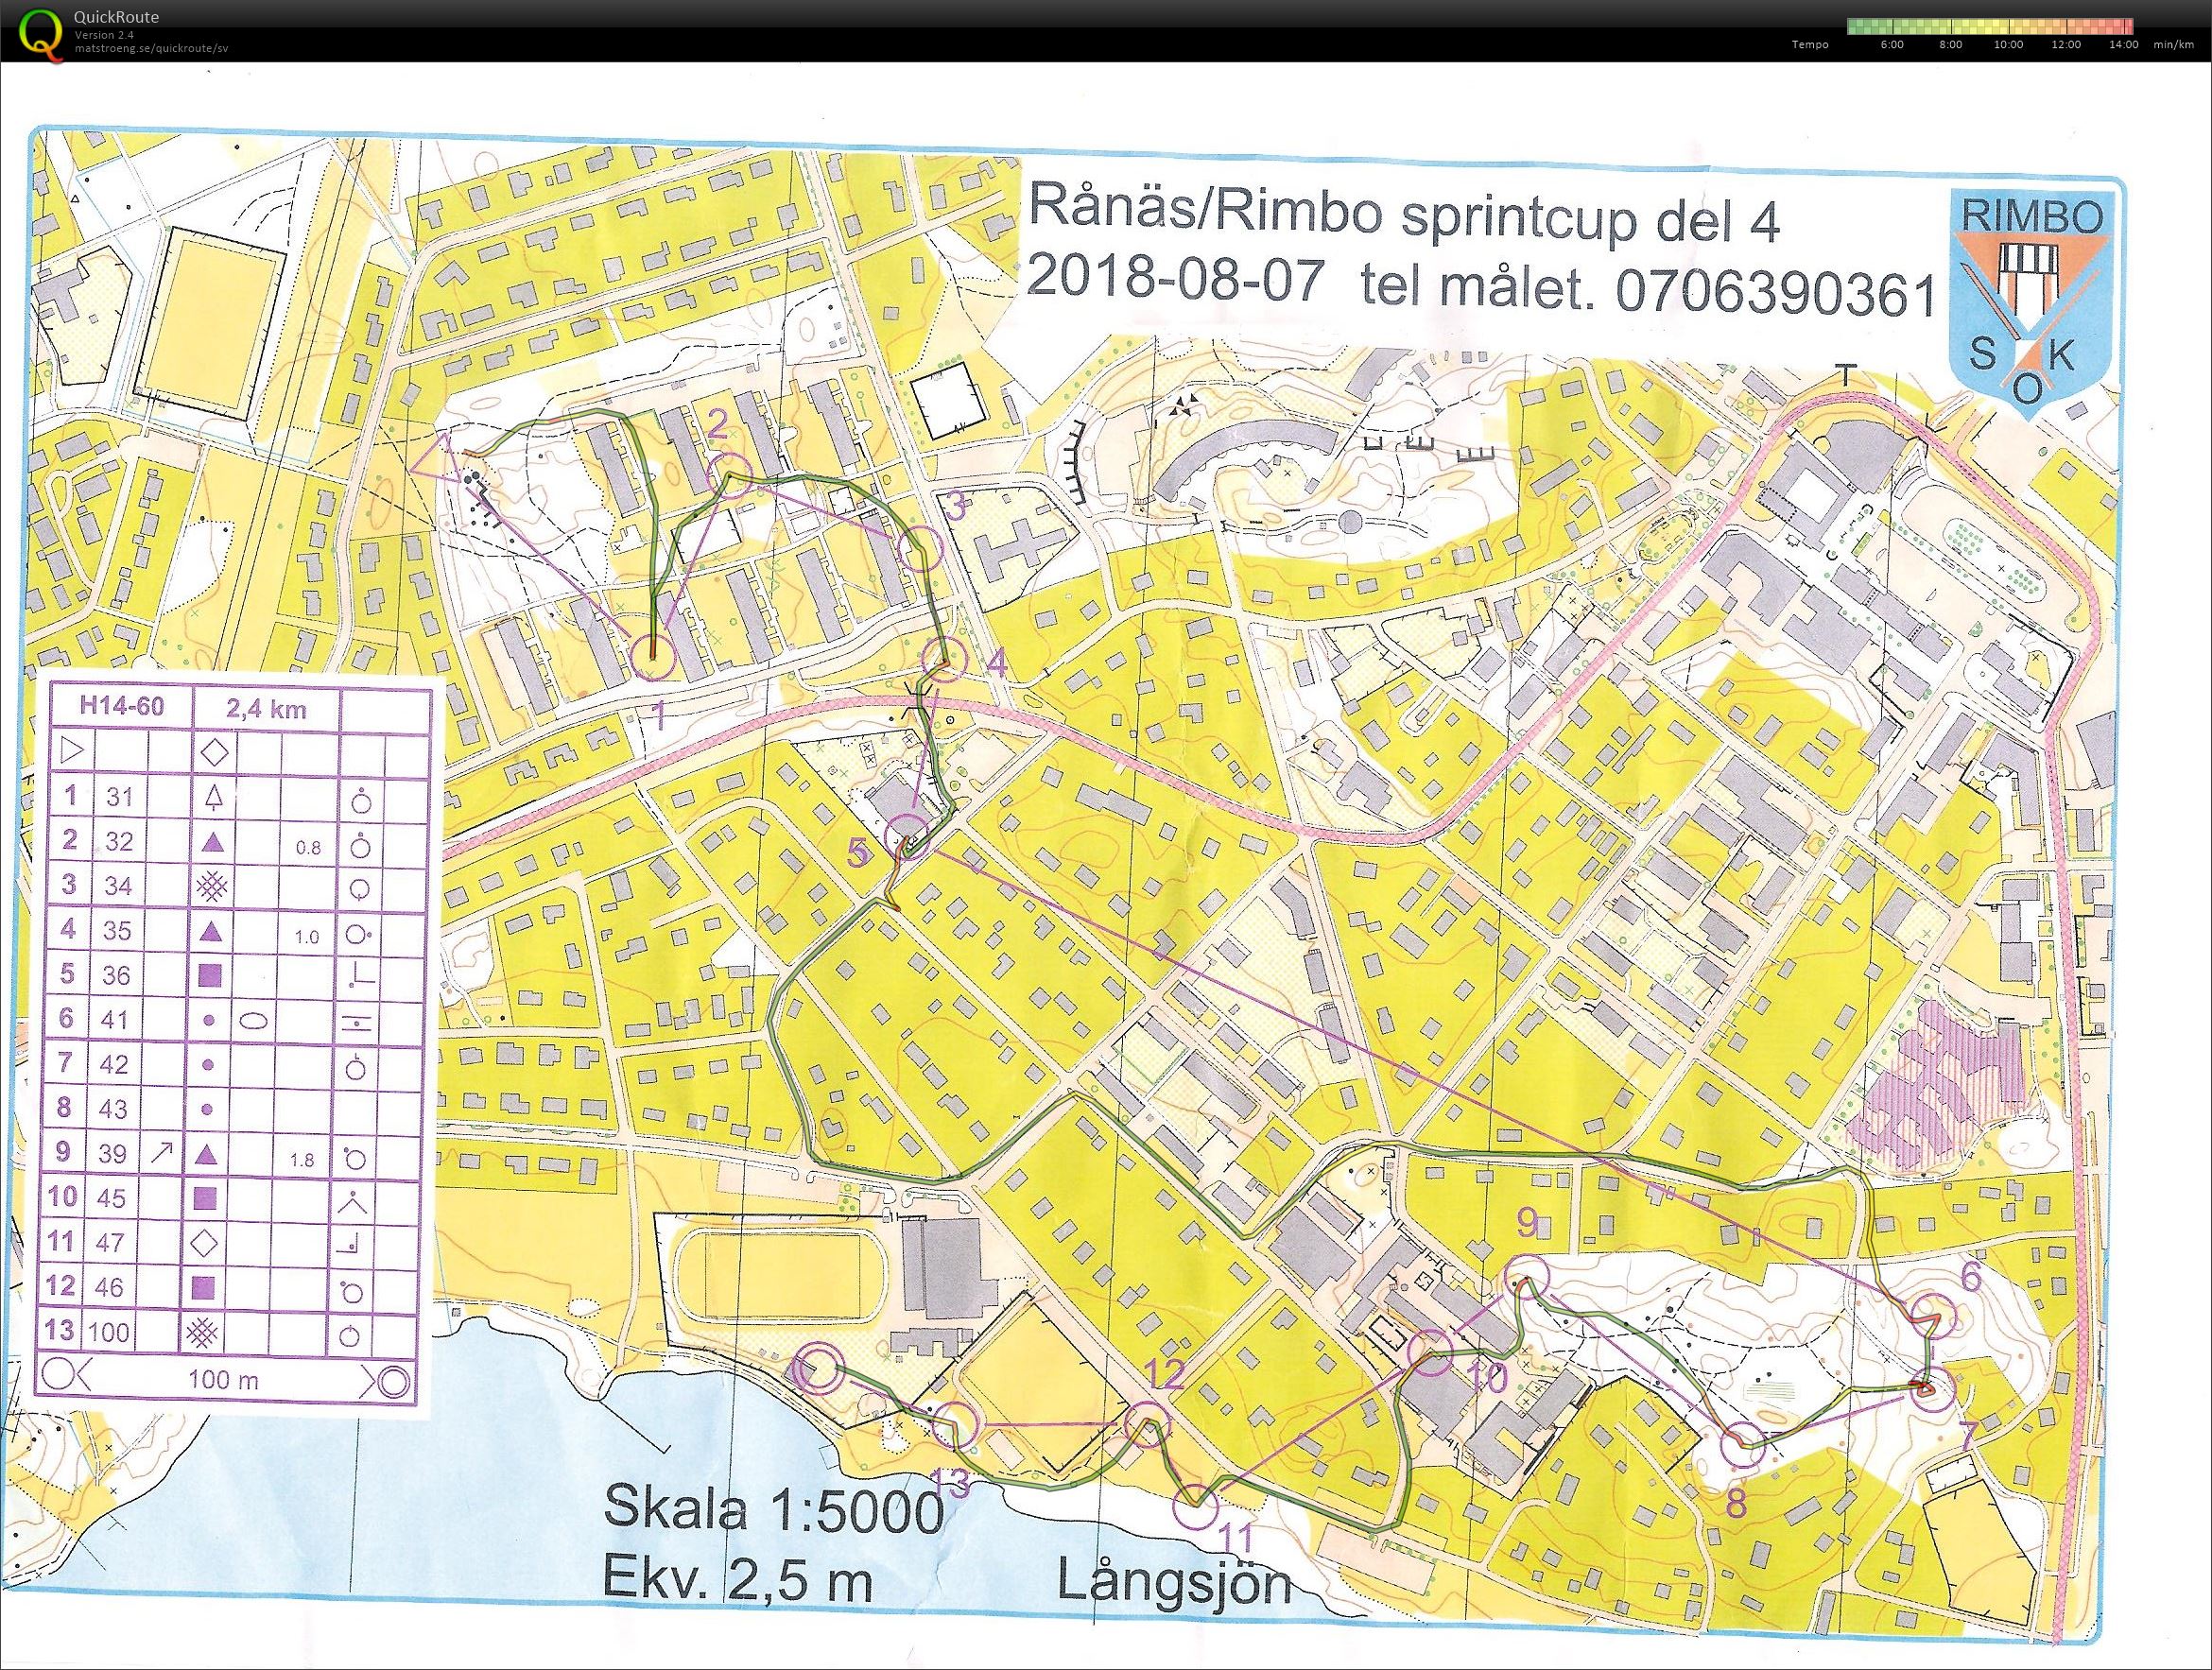 Rånäs/Rimbo sprintcup Final (2018-08-07)